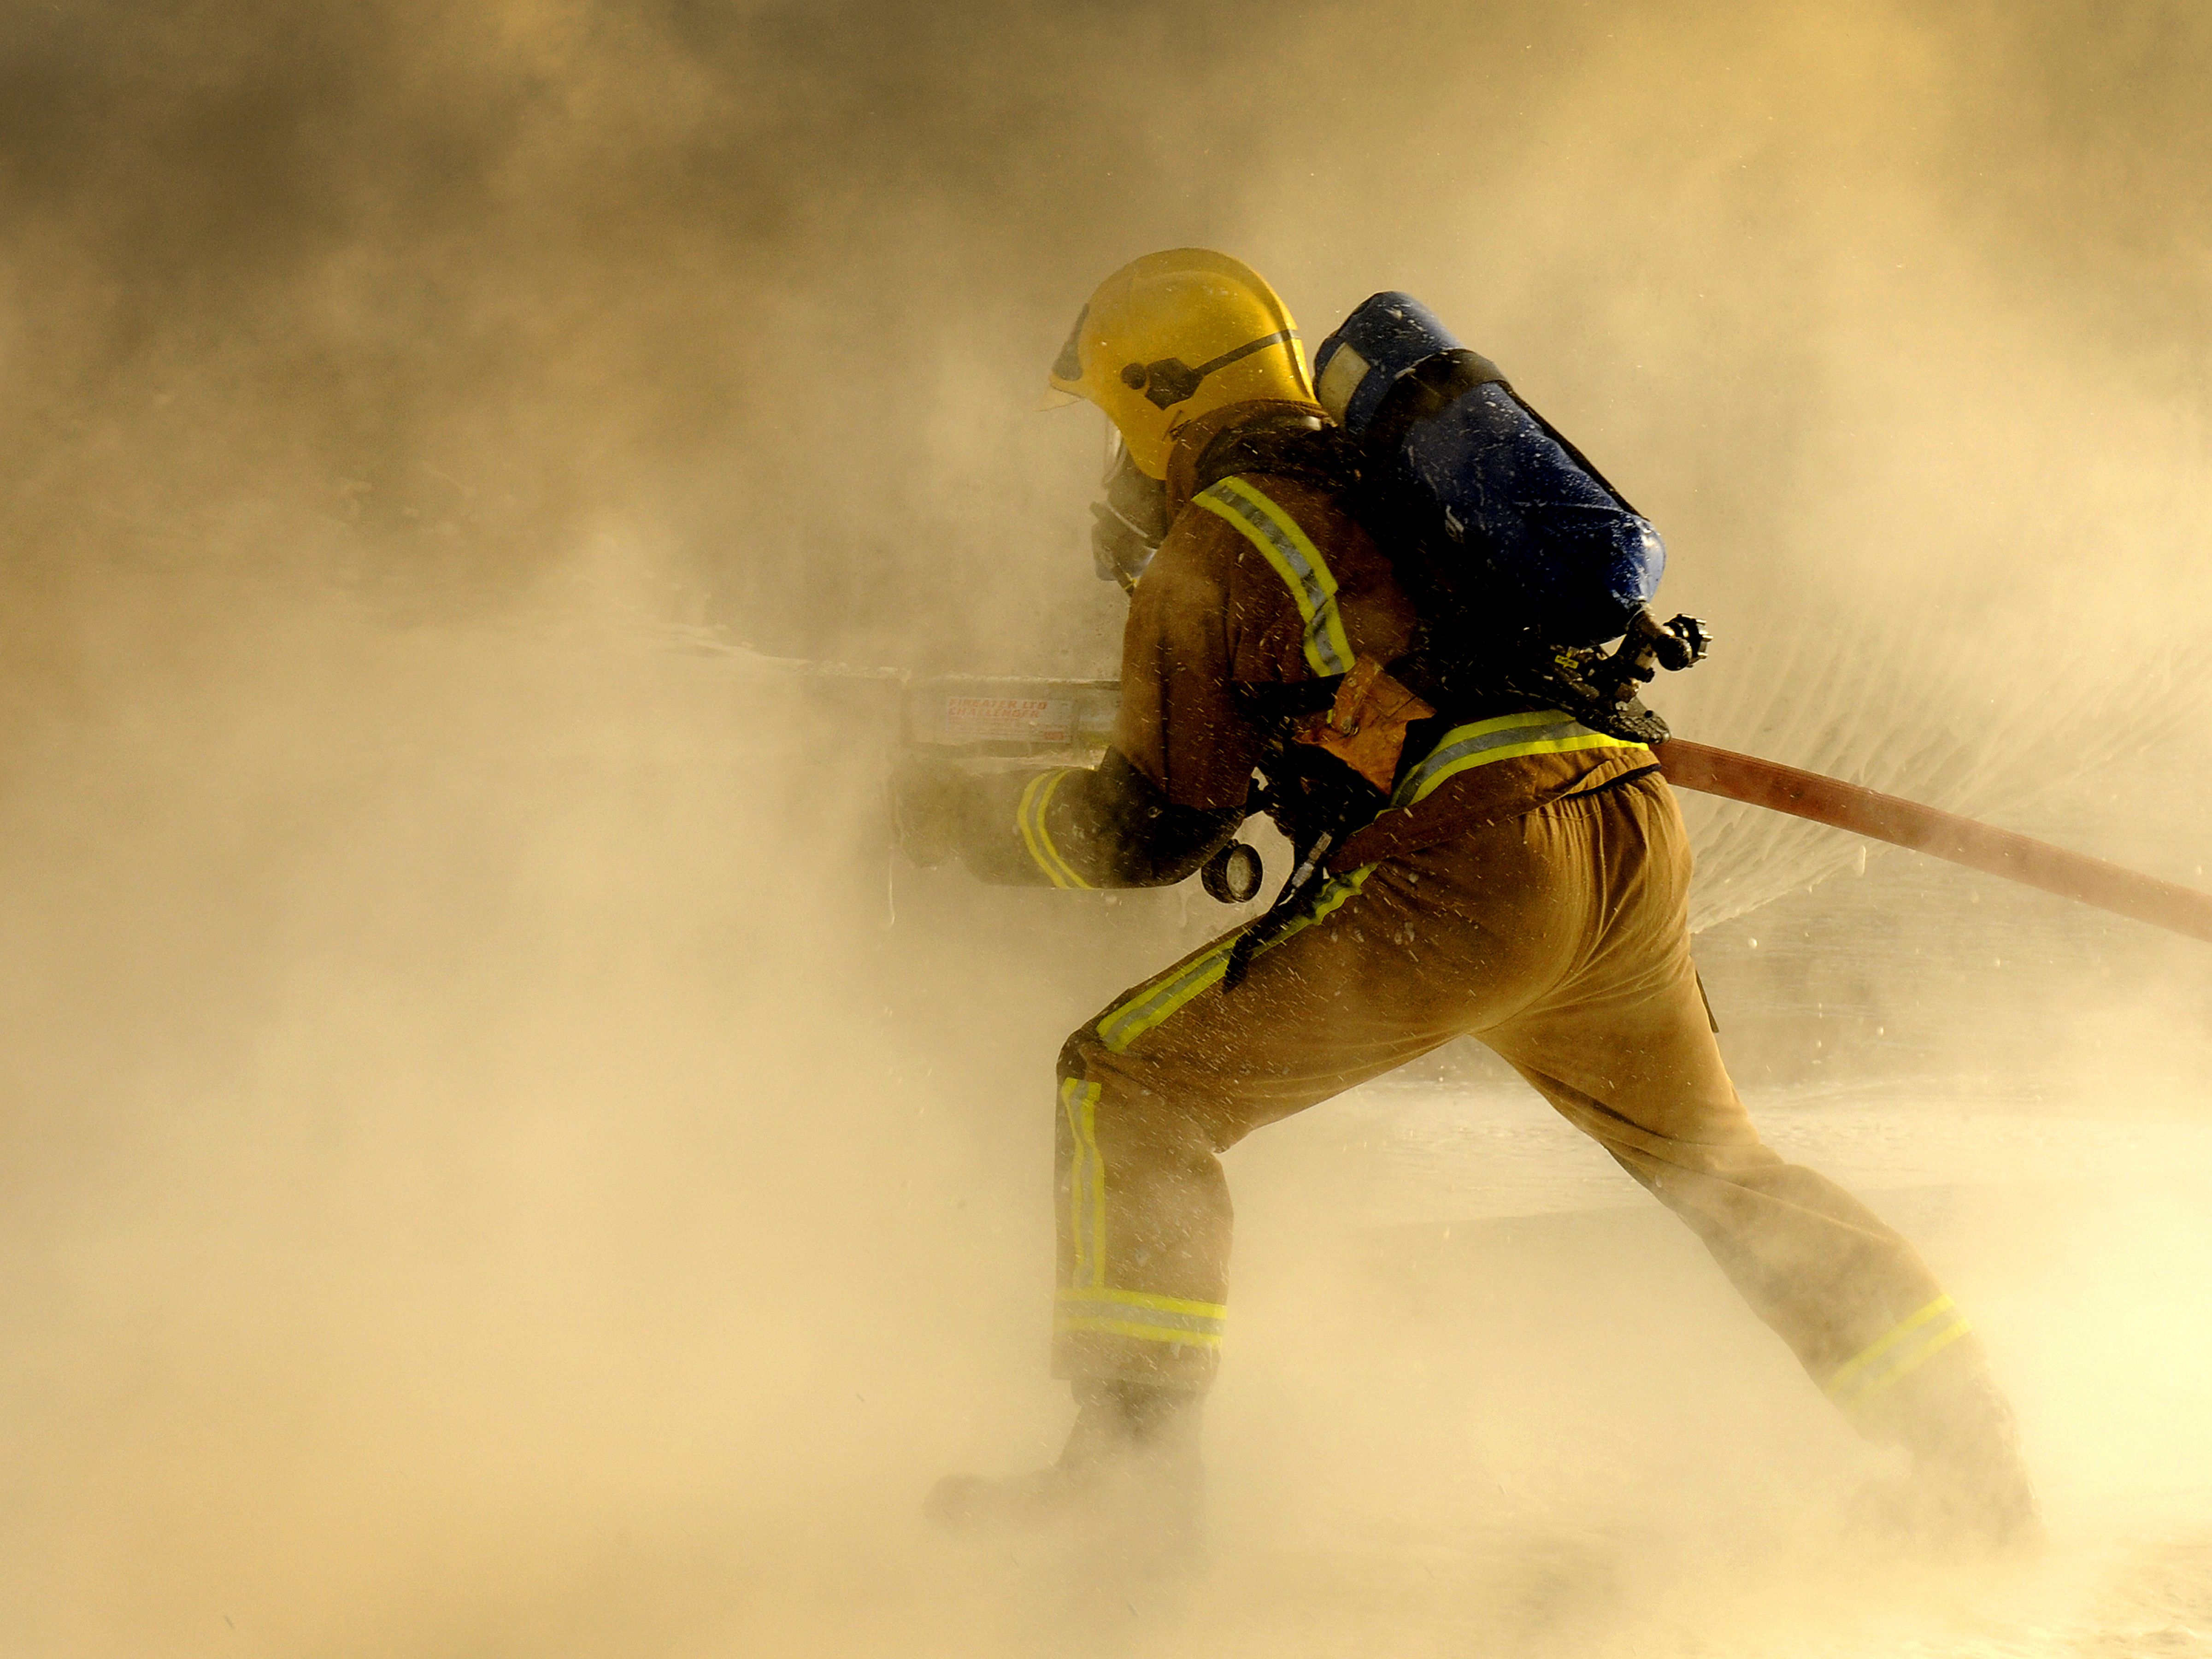 HD Widescreen Firefighter Image Wallpaper For